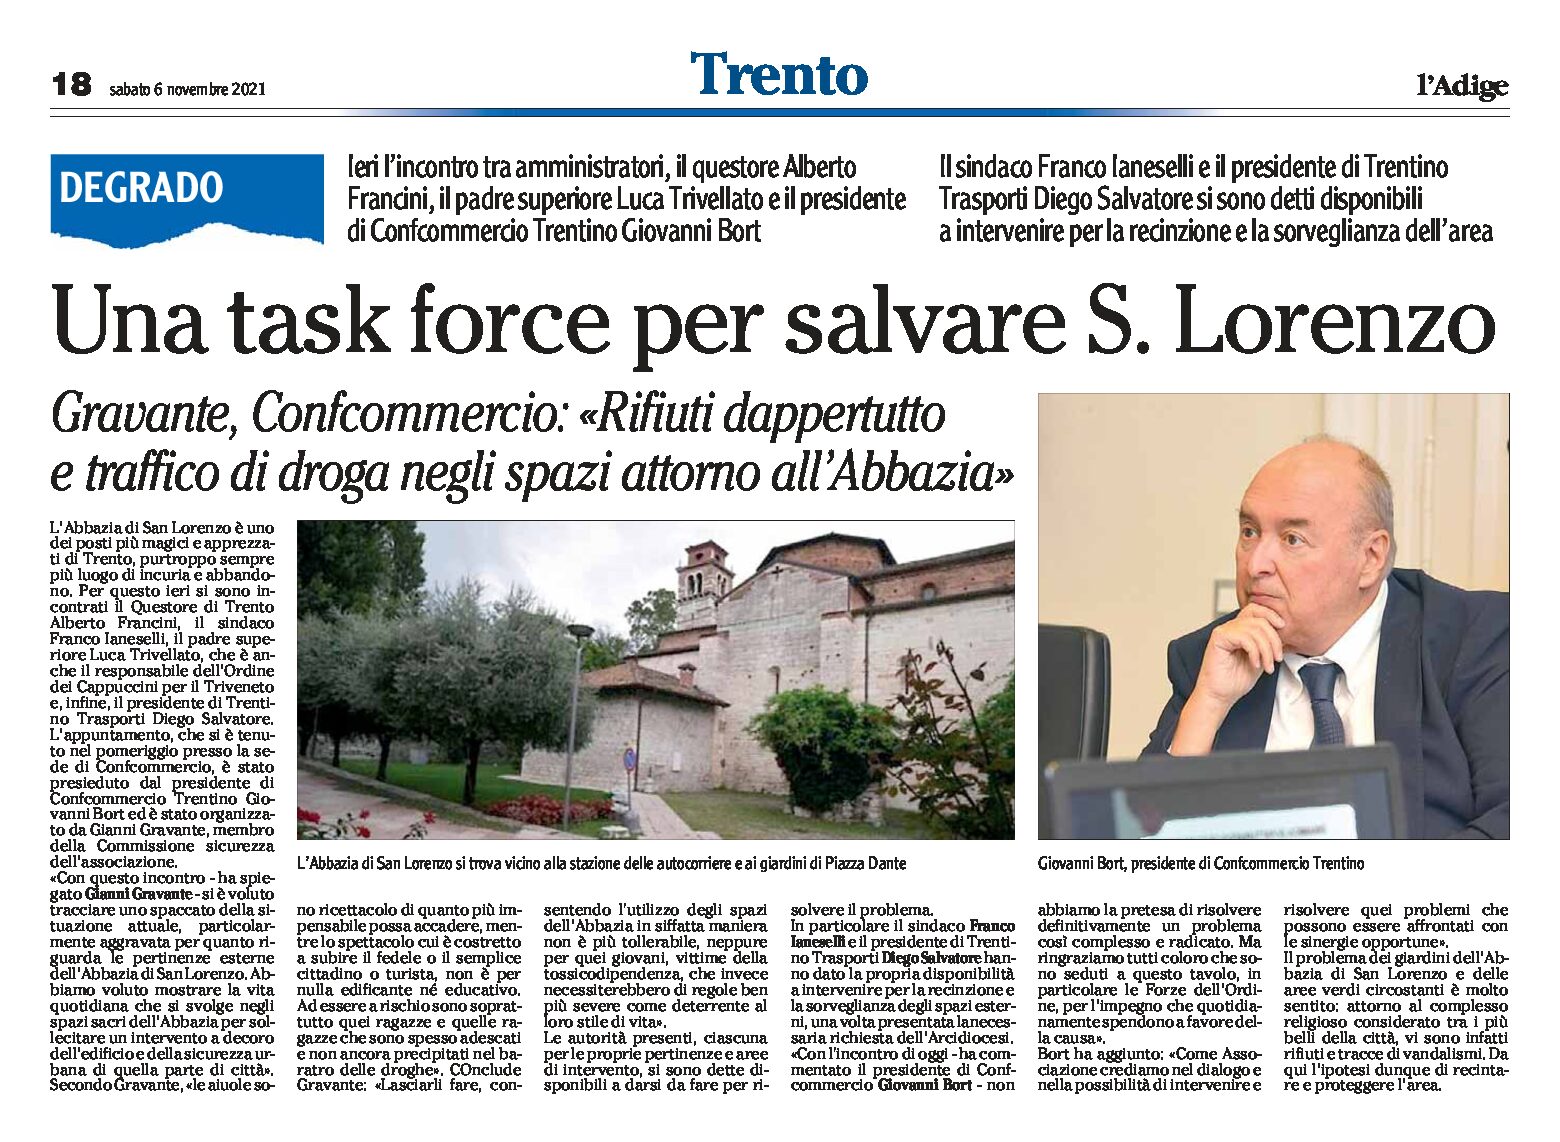 Trento, degrado: una task force per salvare San Lorenzo